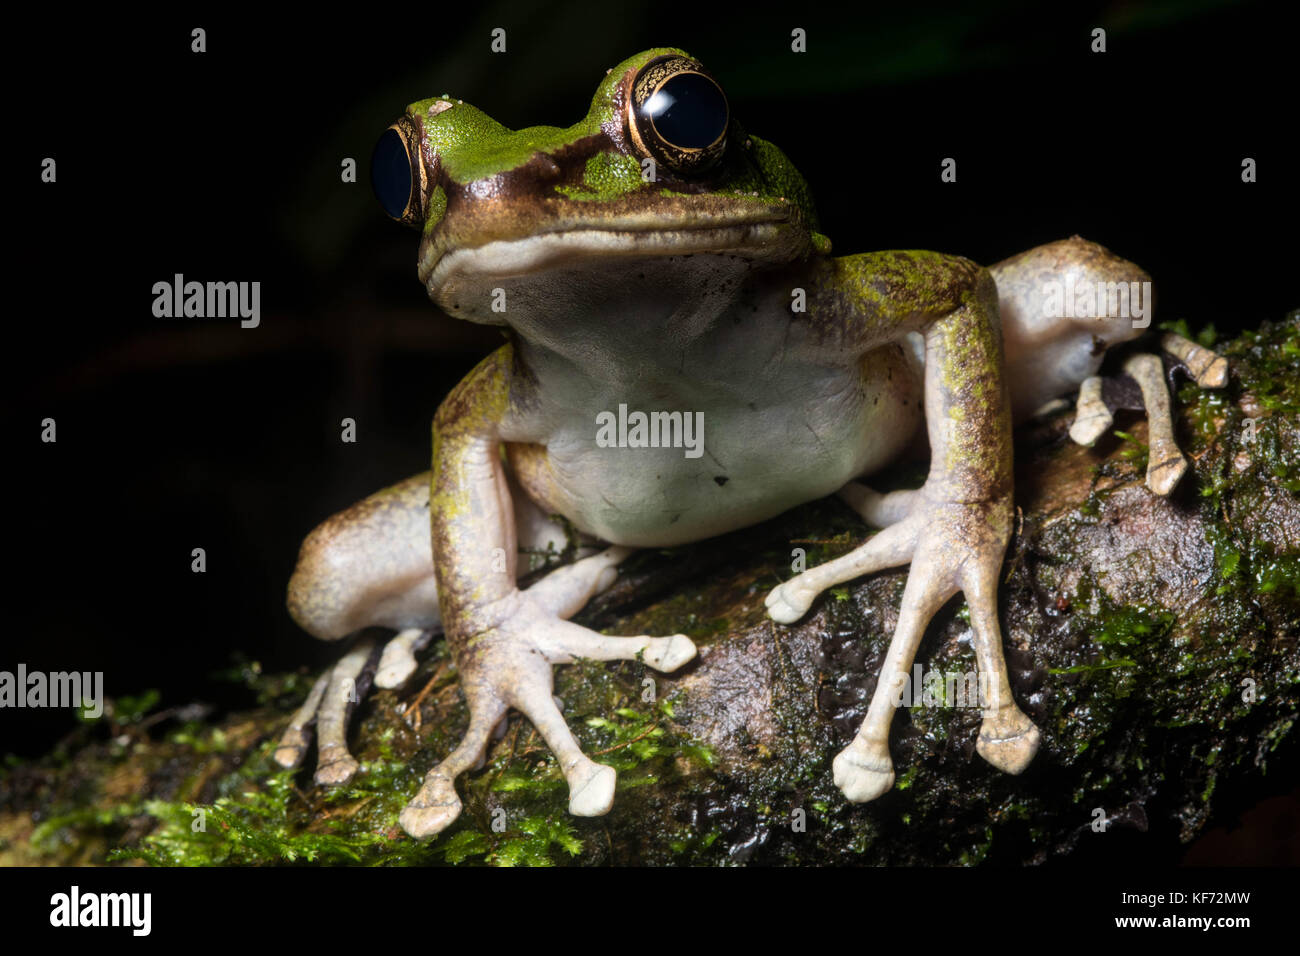 A large female poison rock frog (Odorrana hosii) from Borneo. Stock Photo